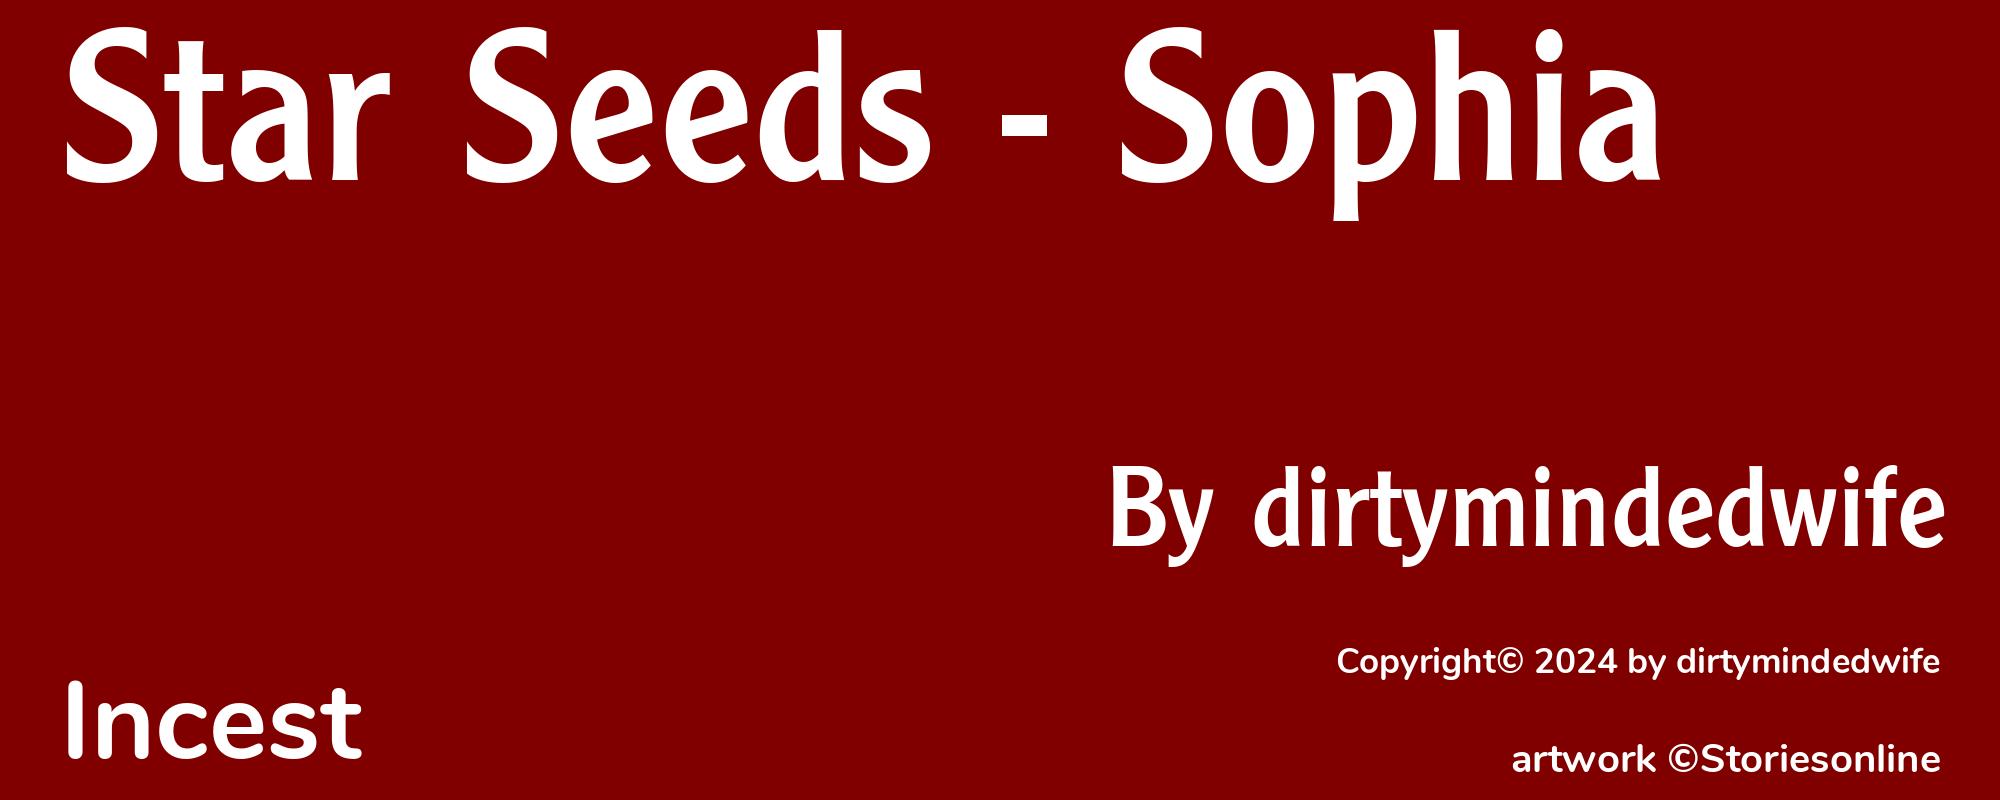 Star Seeds - Sophia - Cover